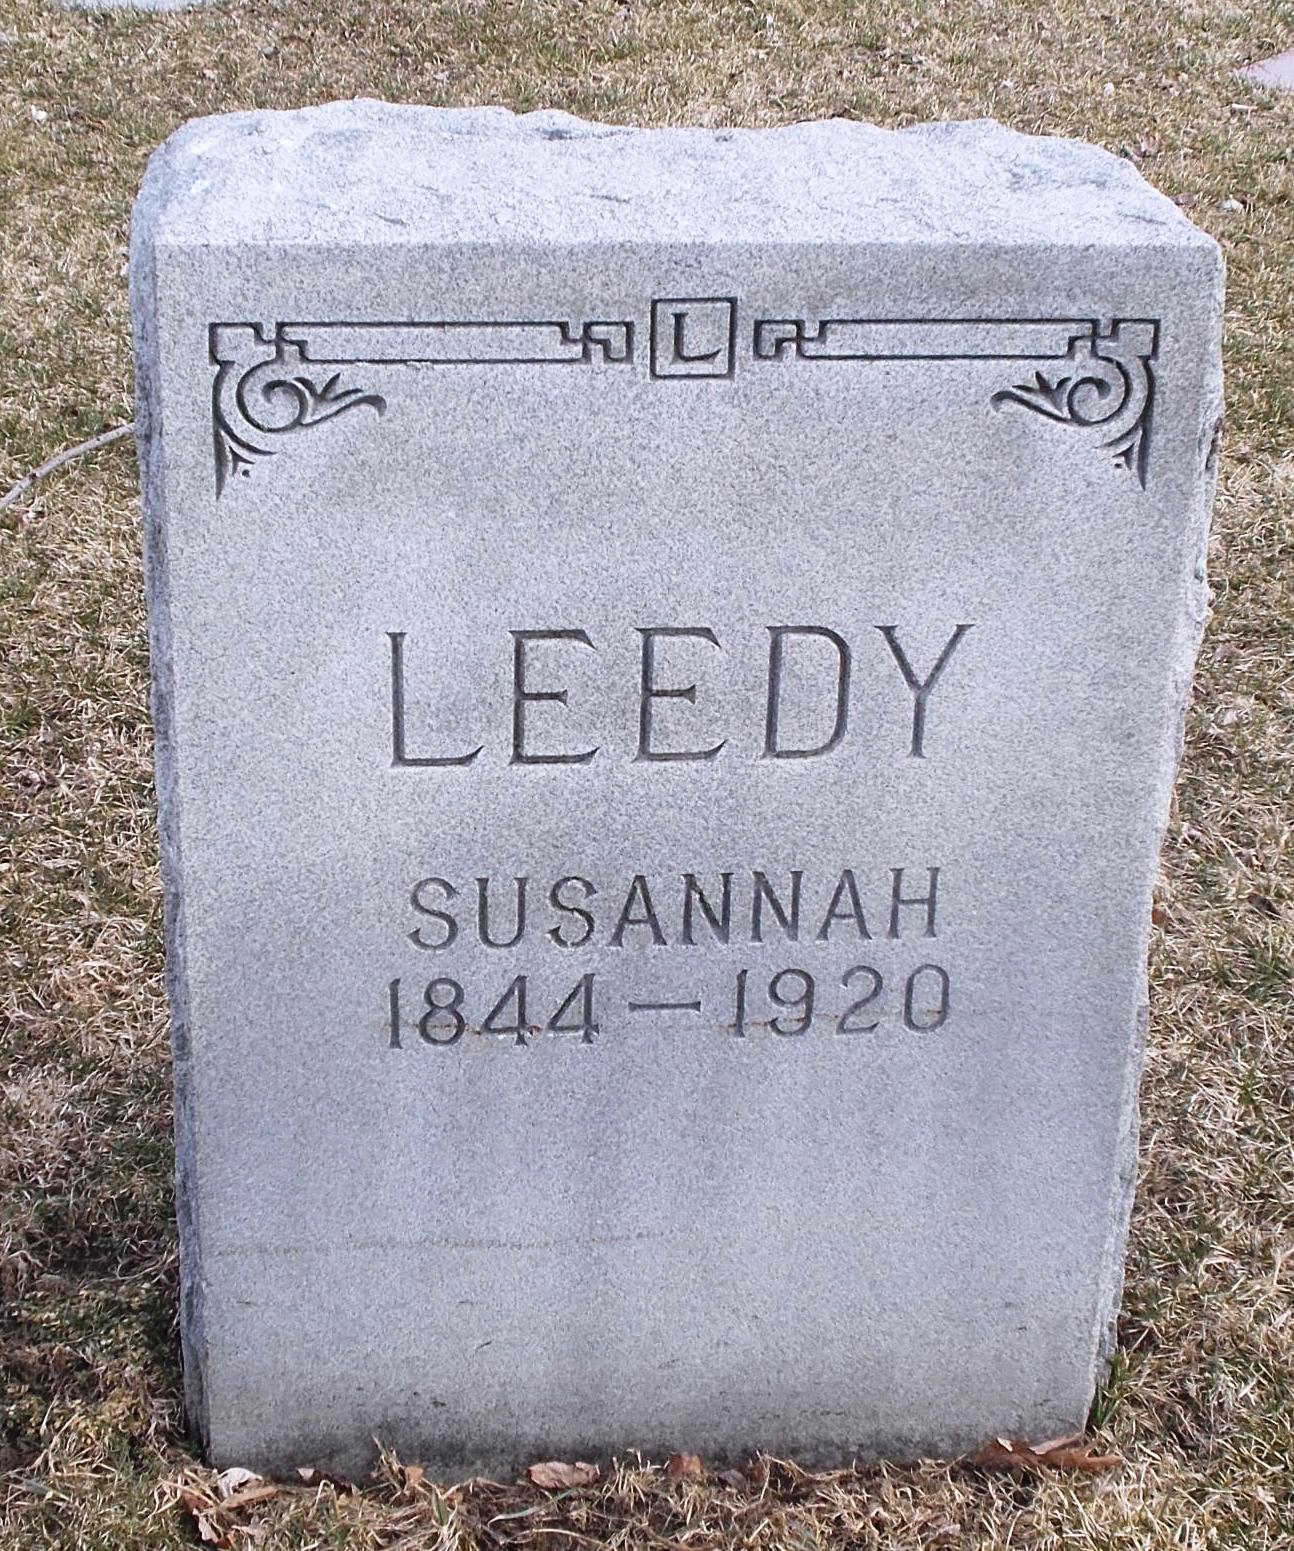 Susannah Leedy